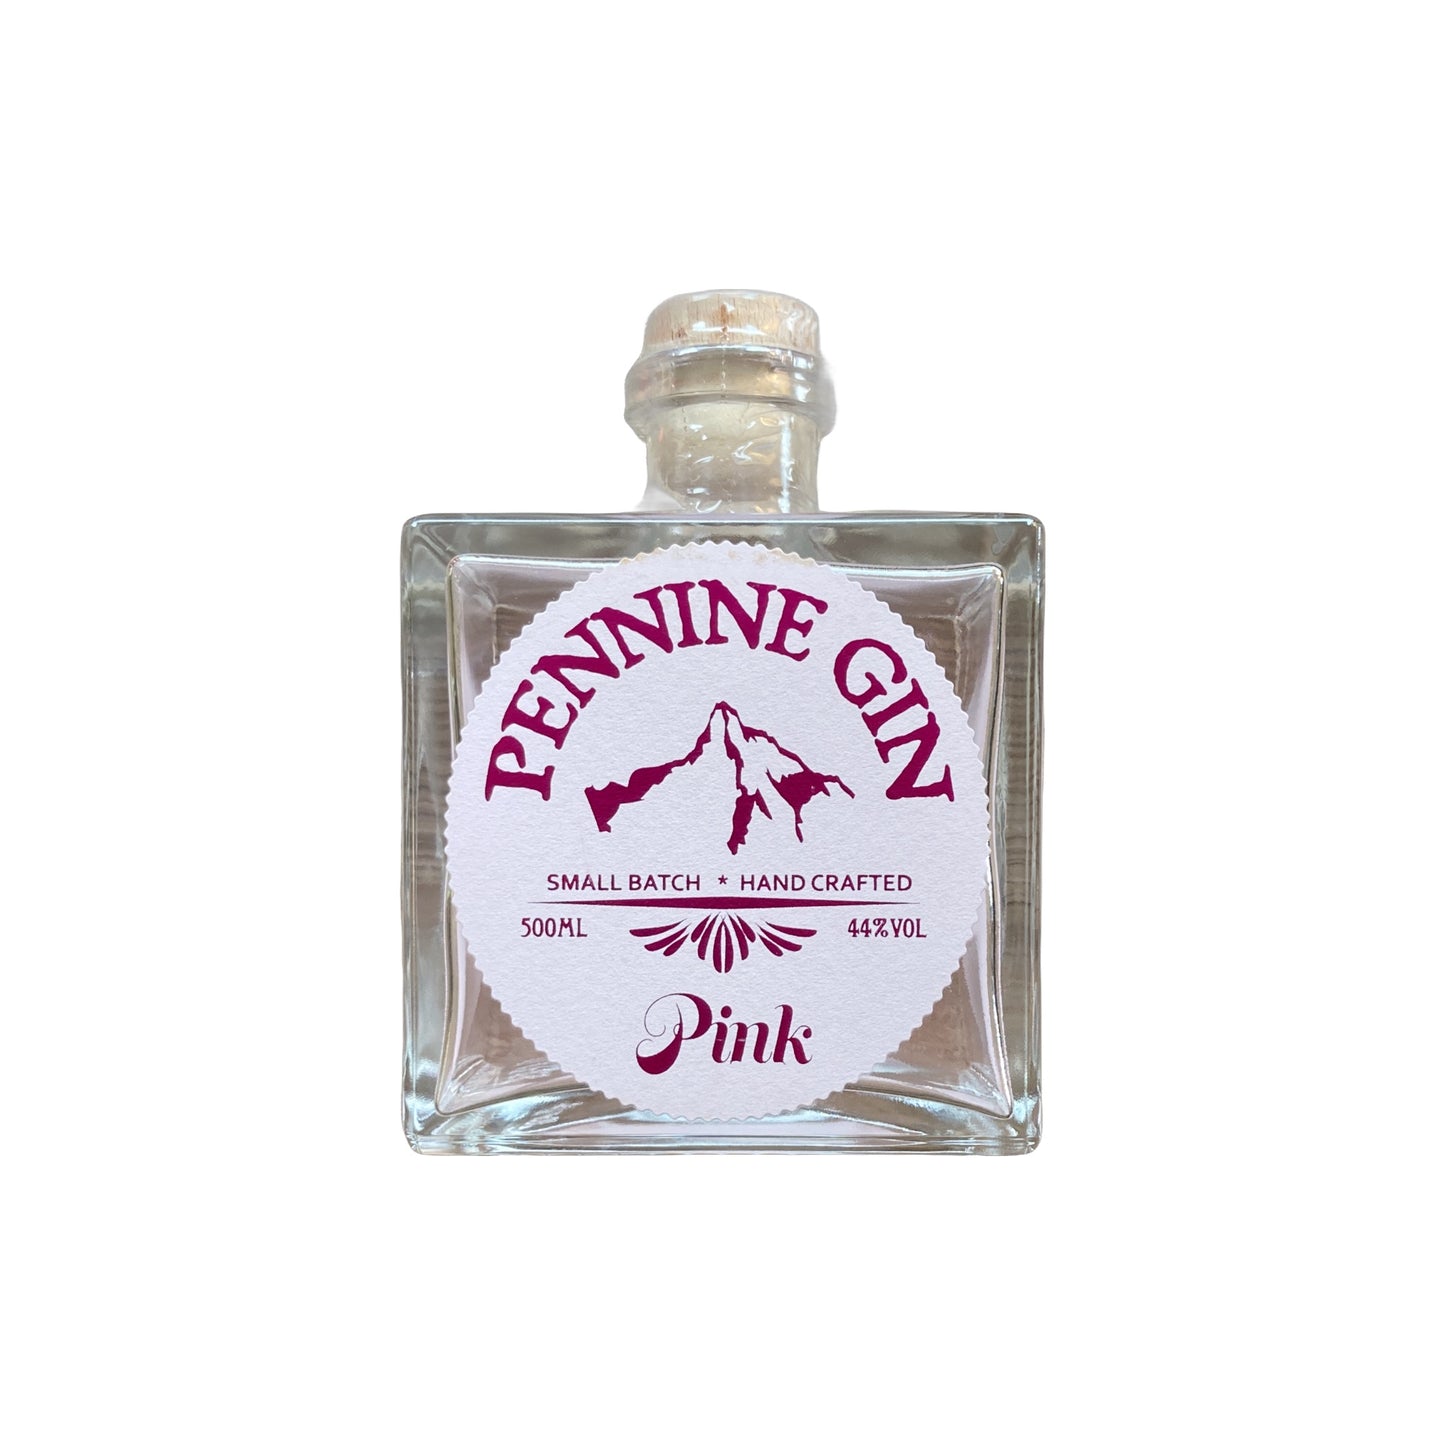 Pennine Gin Pink 500ml